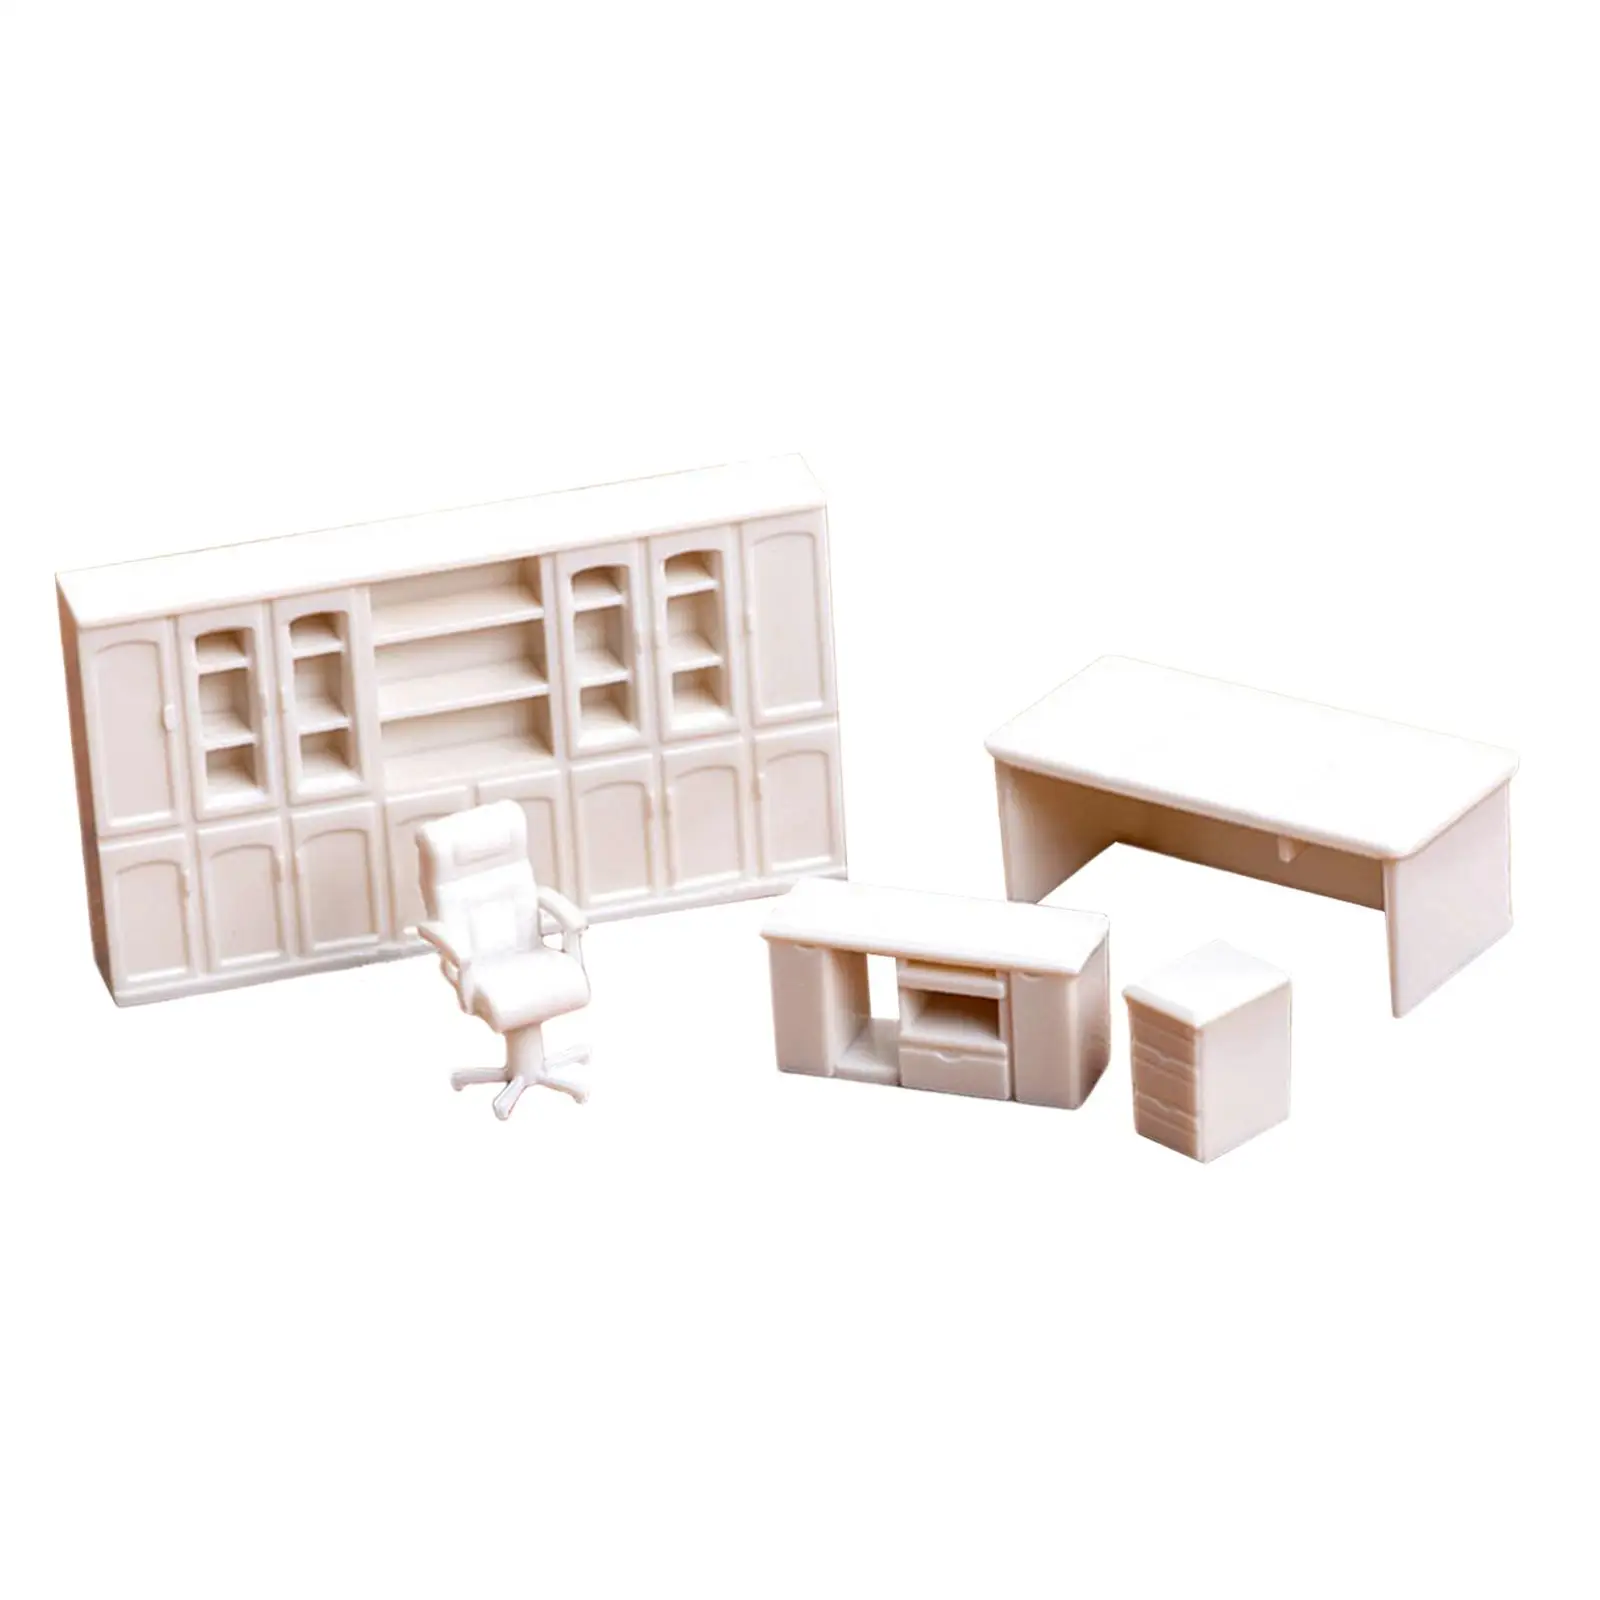 

Miniature 1/50 Furniture Set 1/50 Scale Furniture Model for Diorama Layout Miniature Scenes Decor DIY Scene Ornament Photo Prop